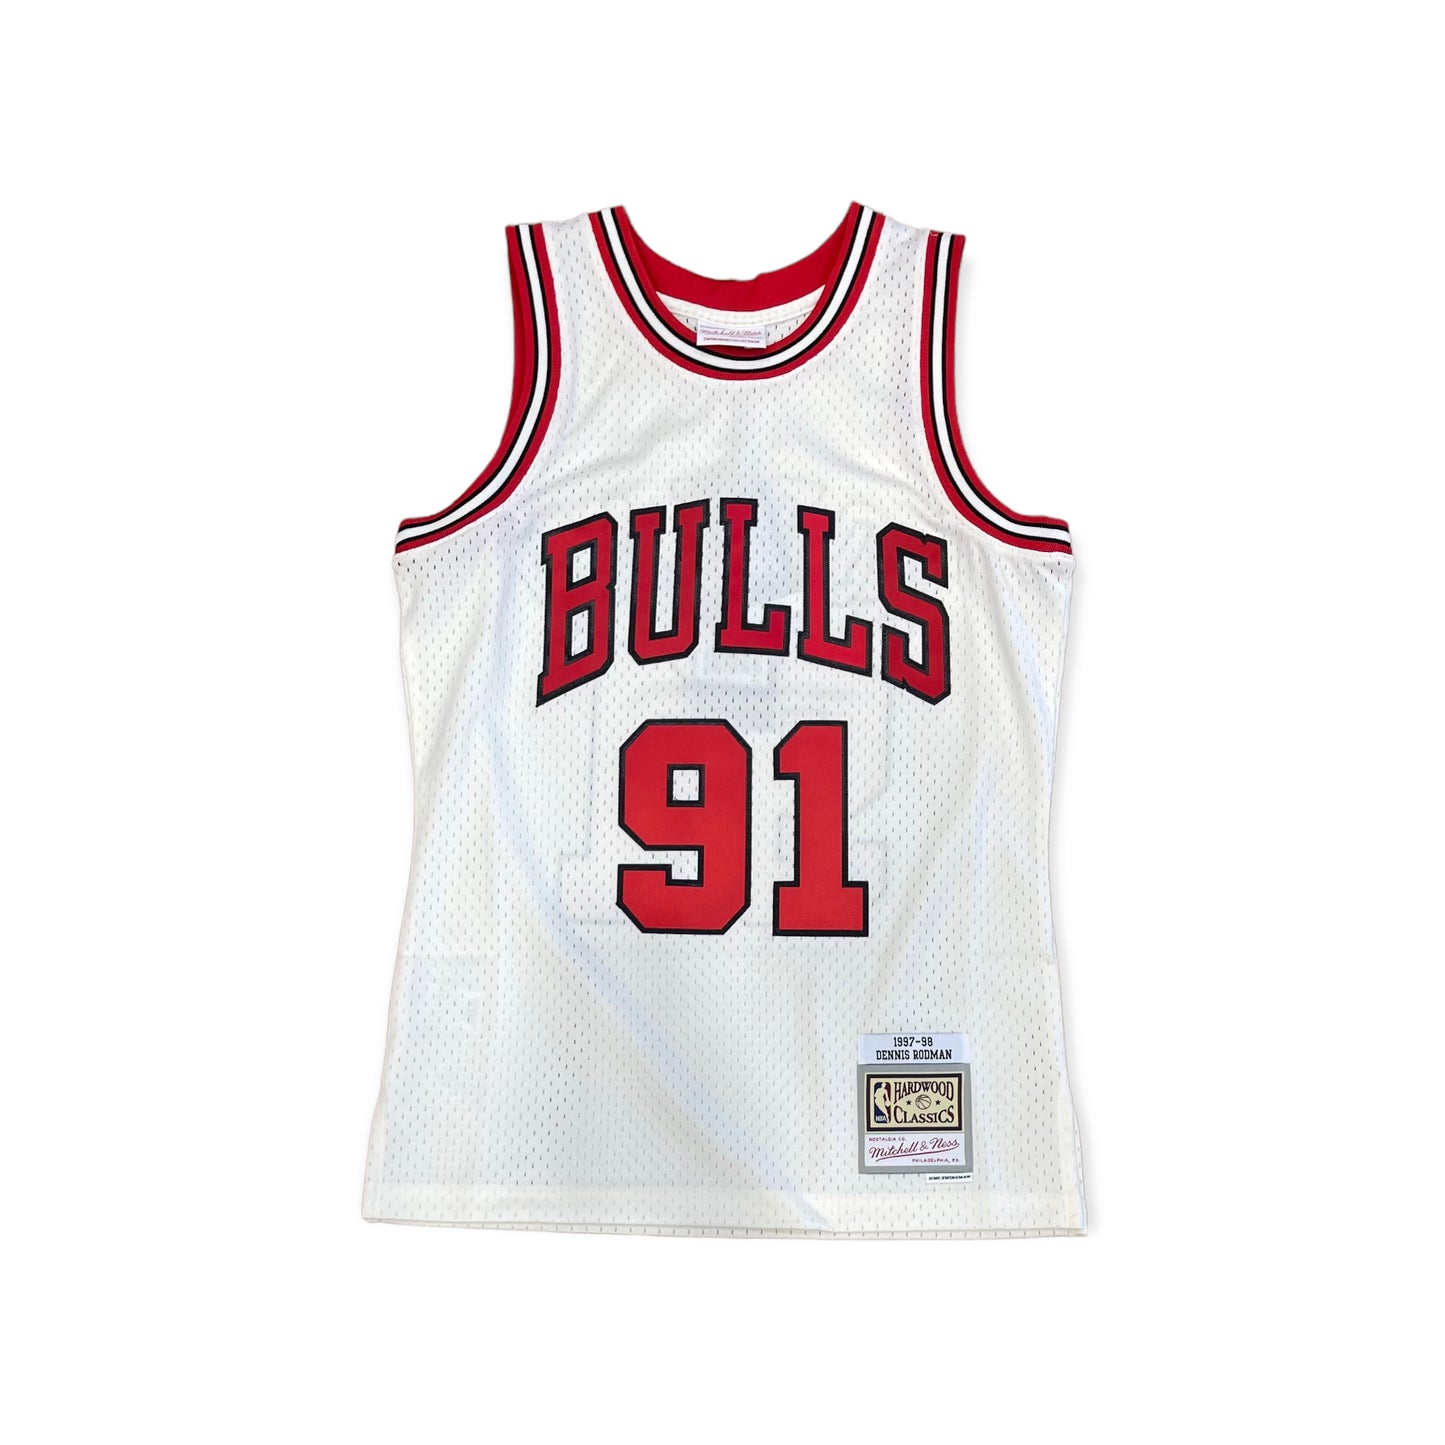 MITCHELL & NESS: Bulls Rodman Cream 97 Jersey